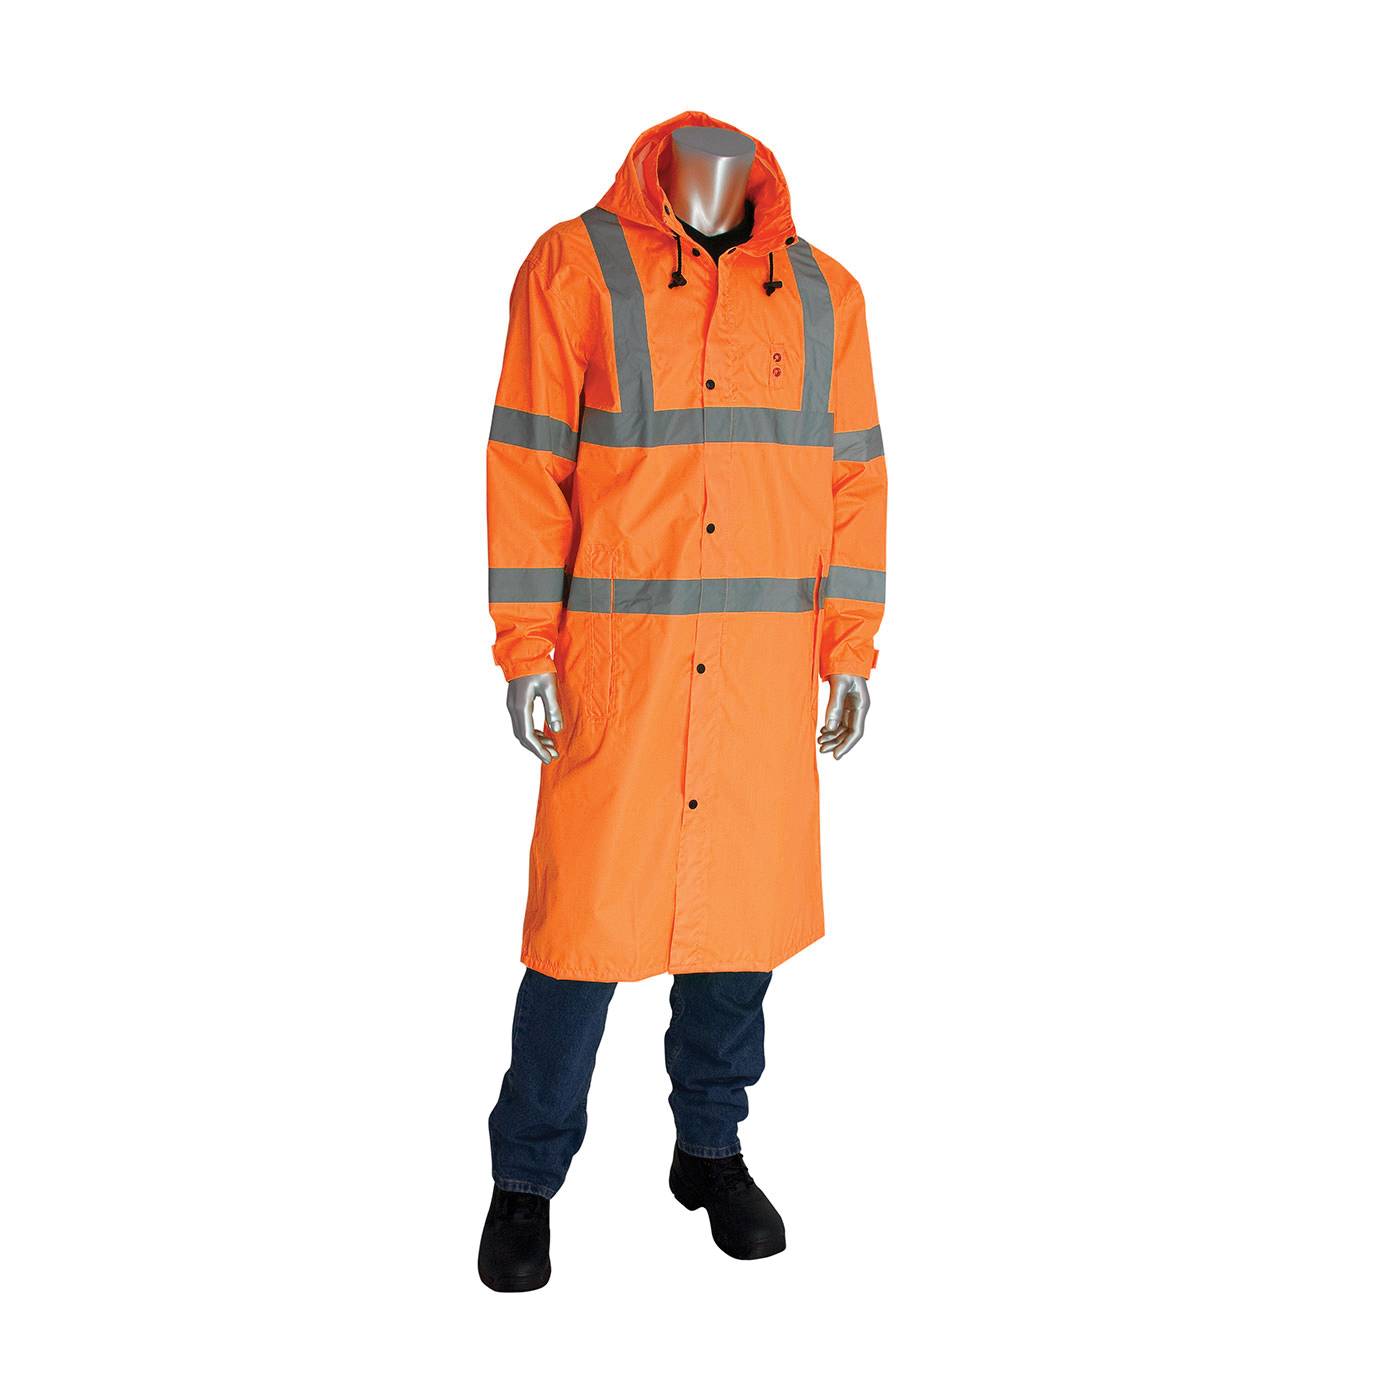 PIP® FALCON™ Viz™ 353-1048-OR/2X All Purpose Waterproof Rain Coat, 2XL, Hi-Viz Orange, 150D Polyester Coated with Polyurethane, Resists: Water, ANSI 107 Type R Class 3, Concealed Hood